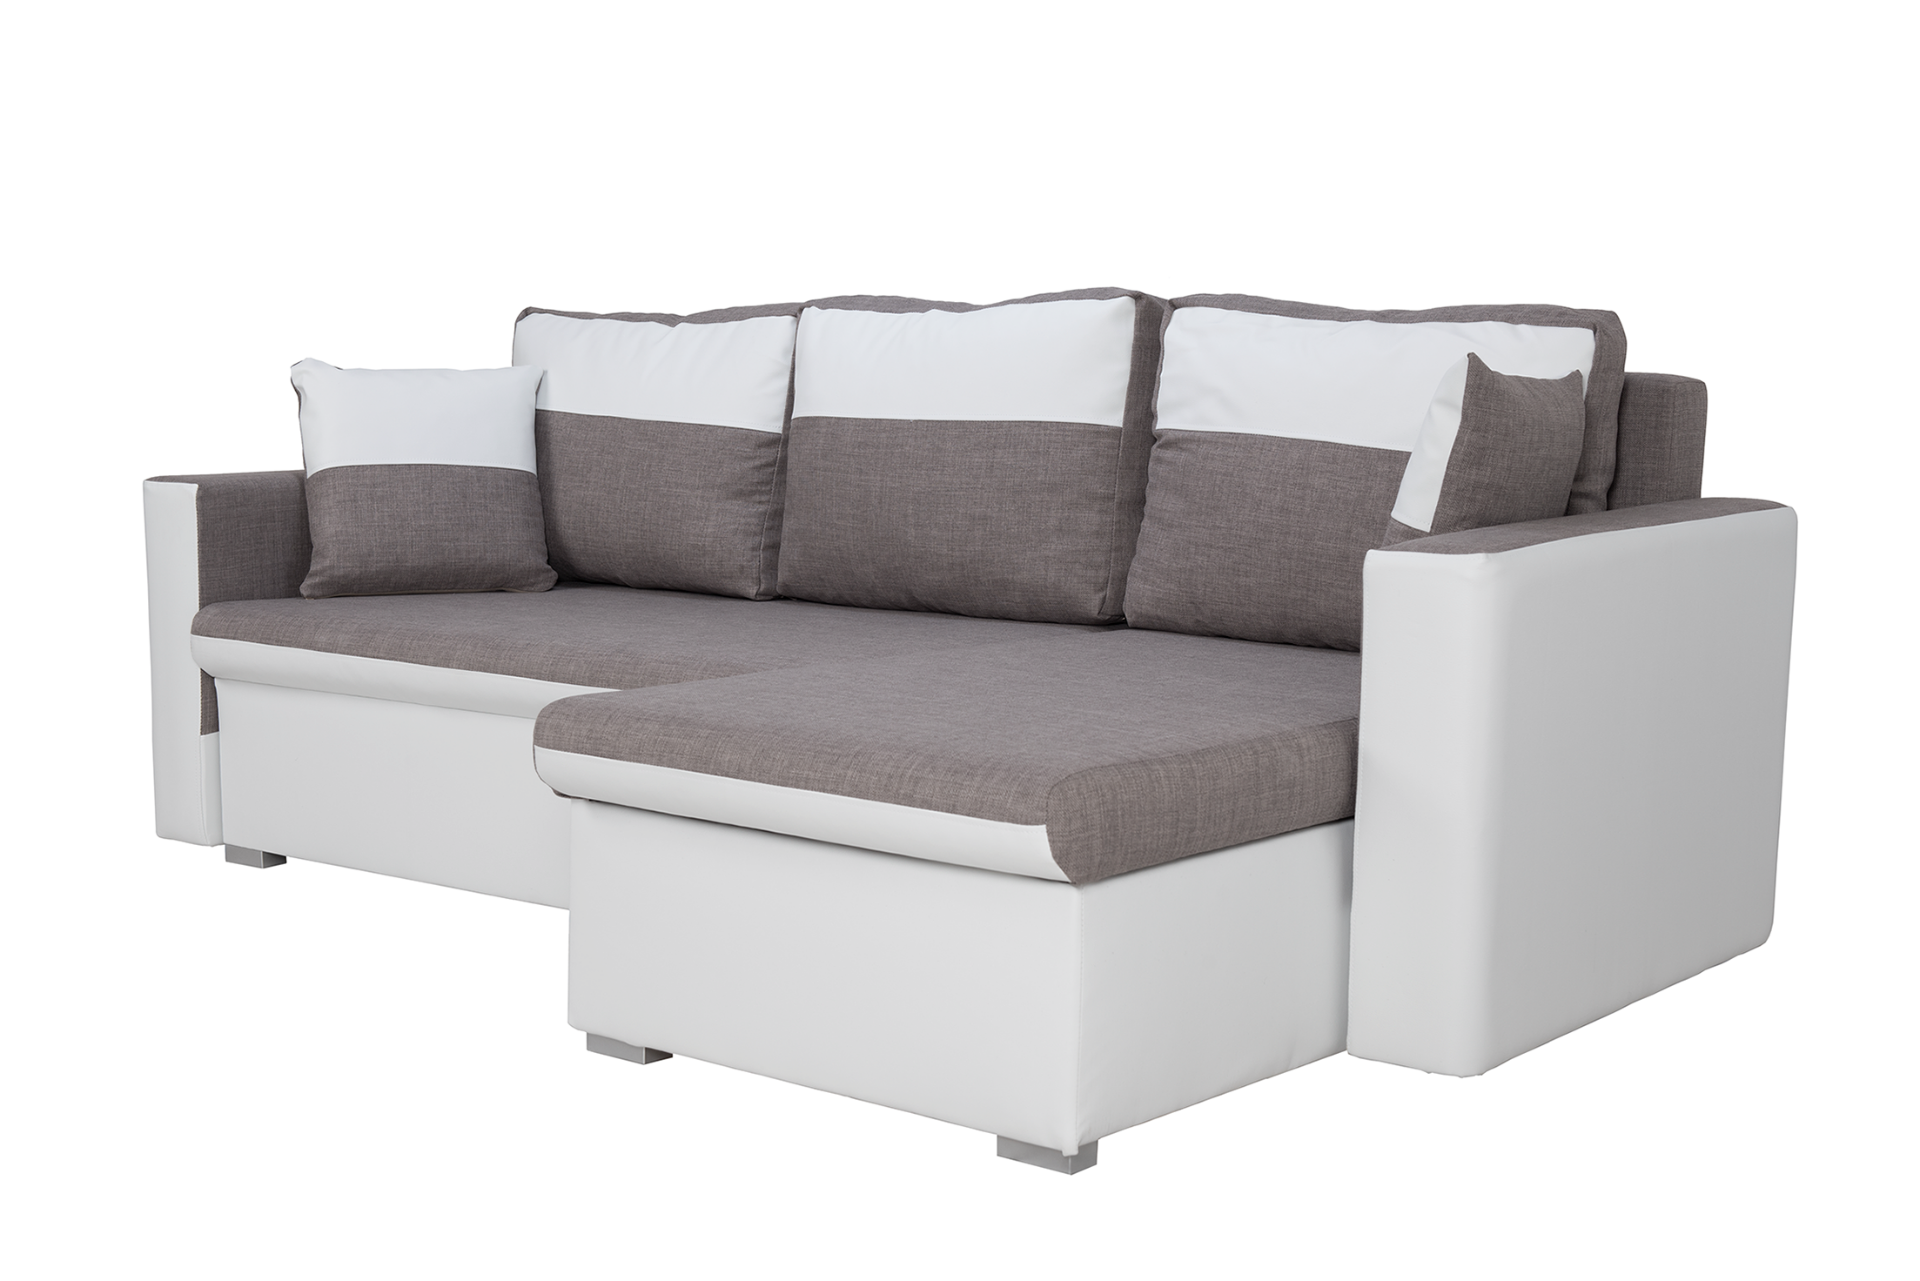 Brand New FlVio Right Hand Facing White/Grey Corner Pull Out Sofa Bed With Storage - Image 2 of 3